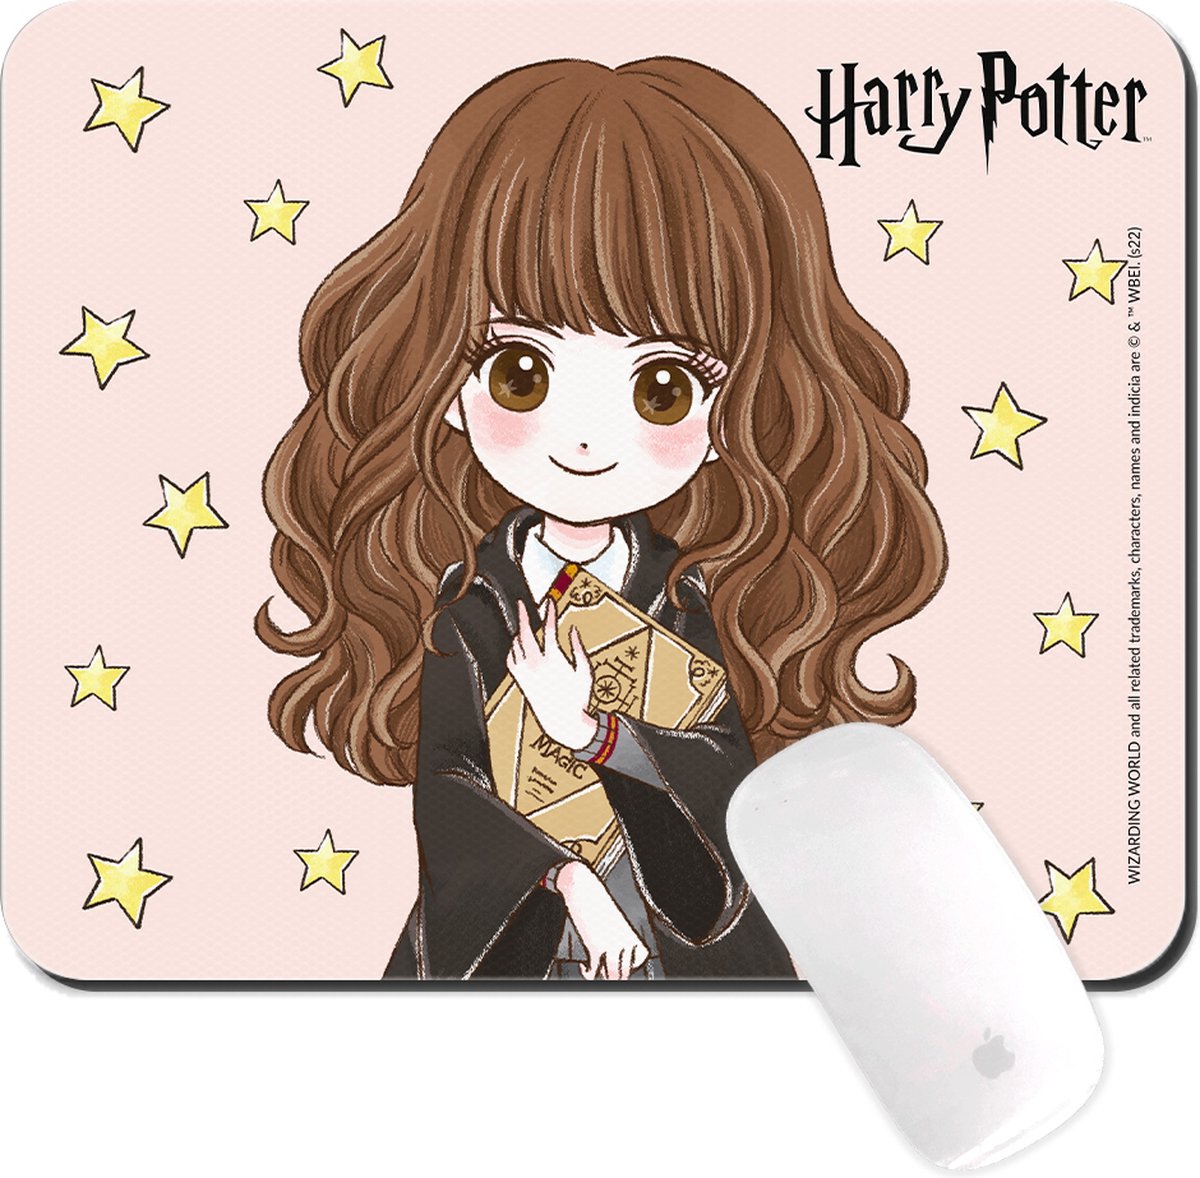 Harry Potter - Muismat 22x18cm 3mm dik